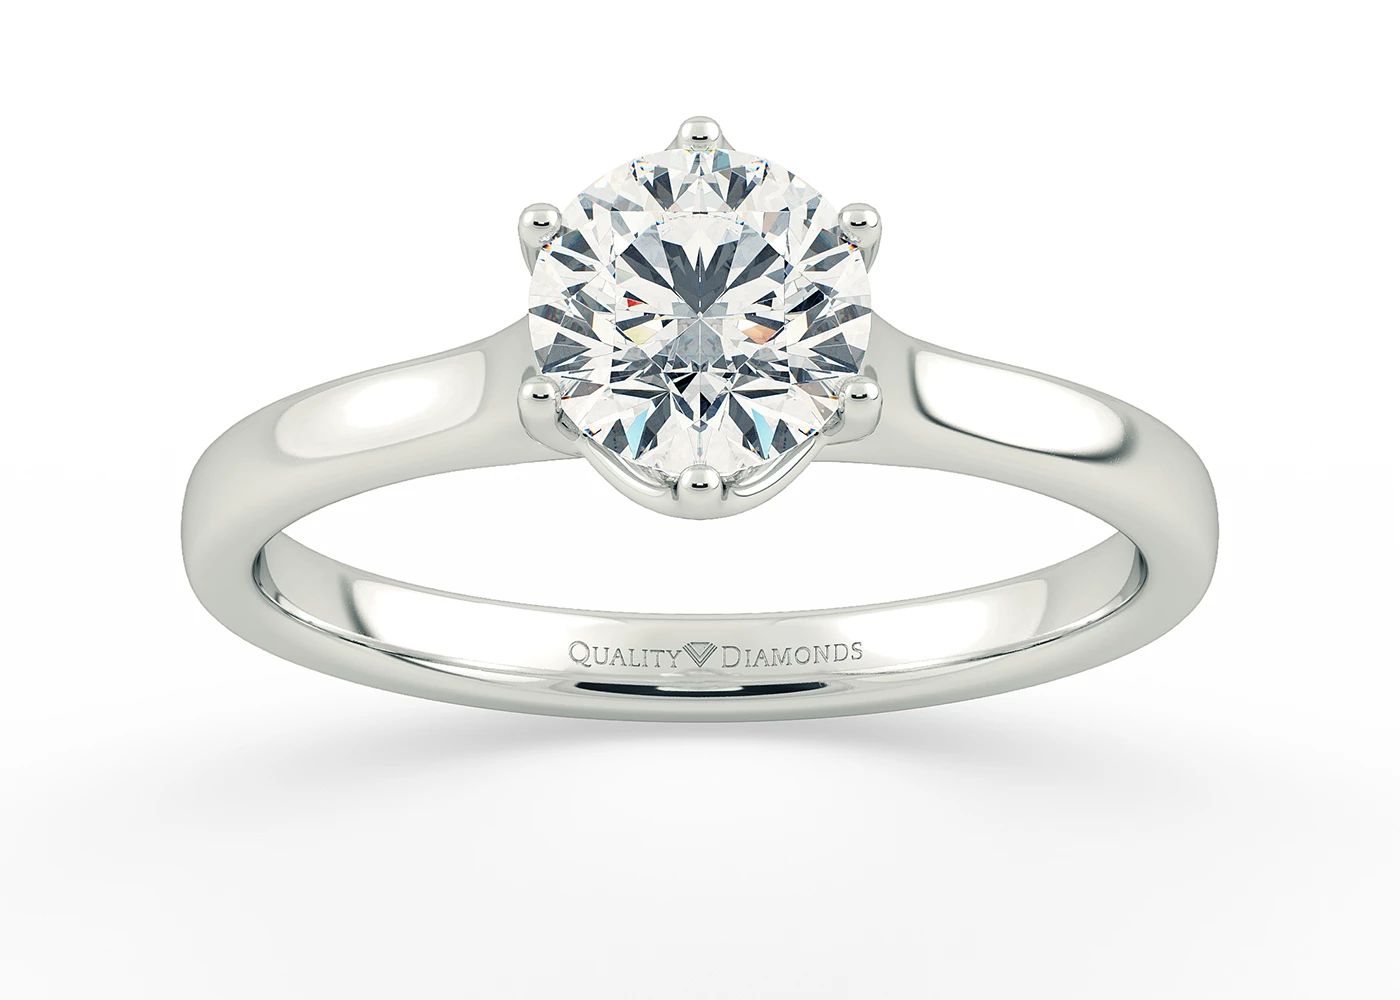 Six Claw Round Brilliant Promessa Diamond Ring in Palladium